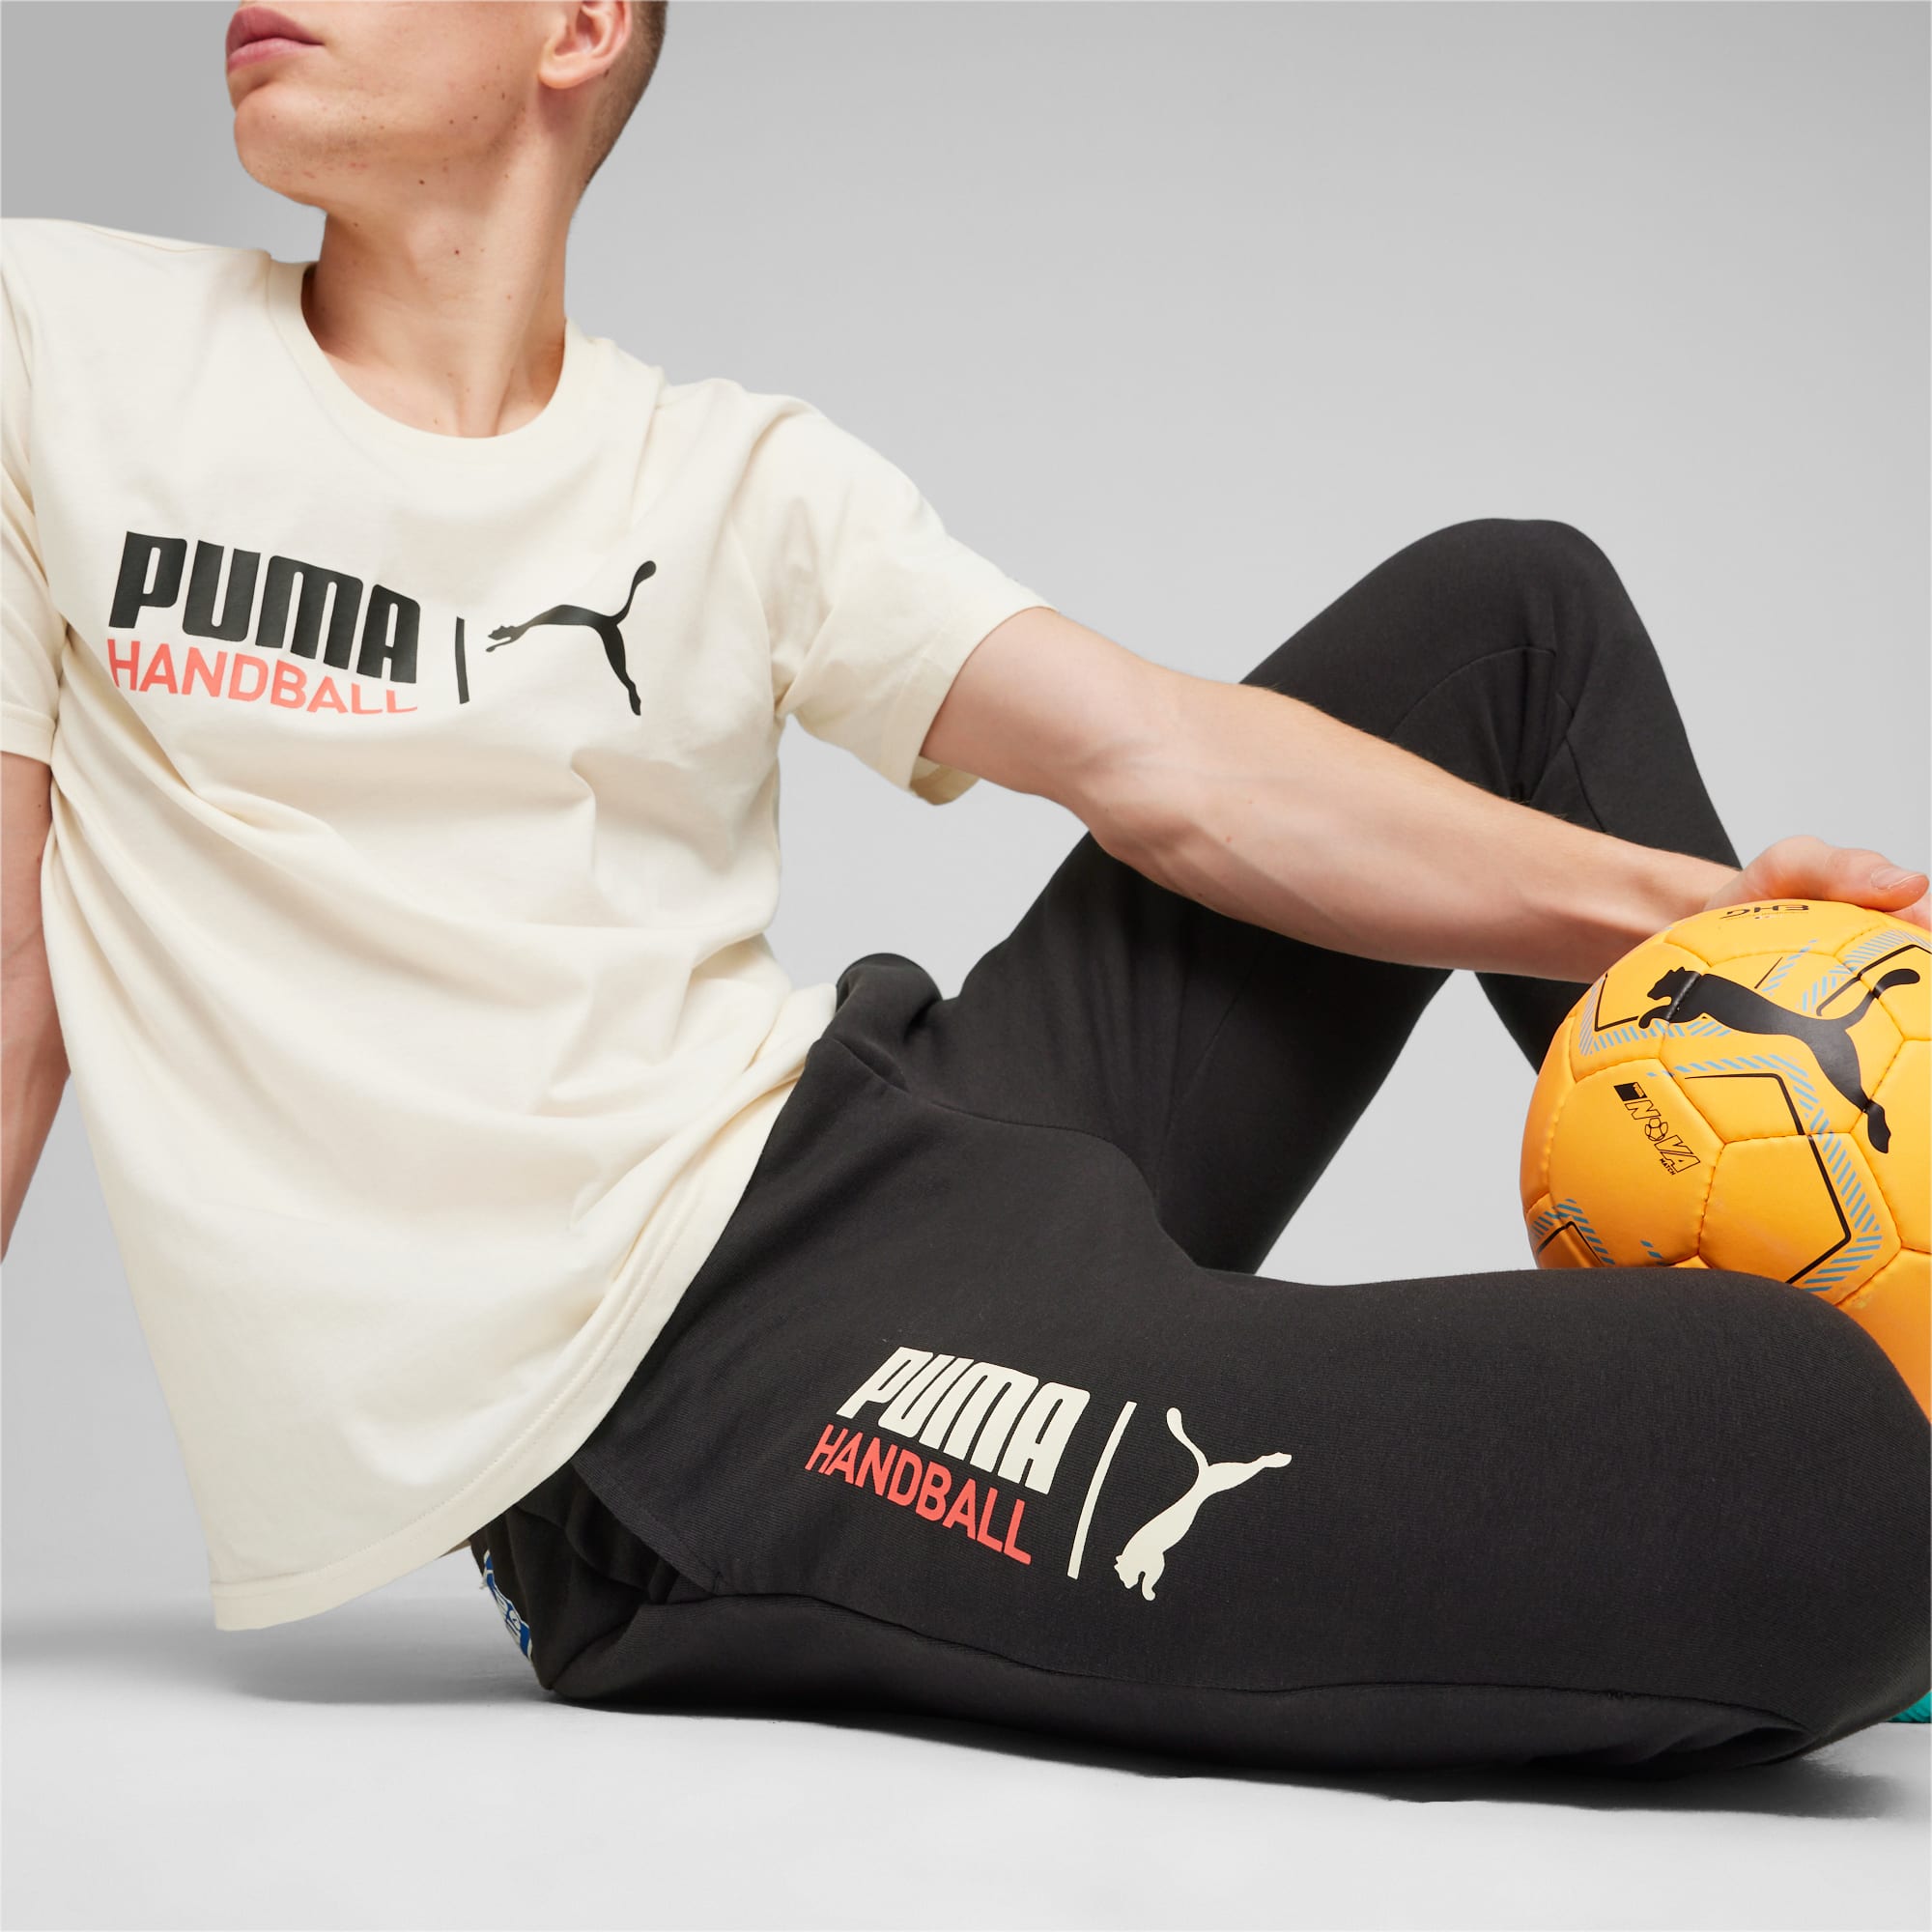 PUMA Handball Sweatpants Men, Black/Sugared Almond